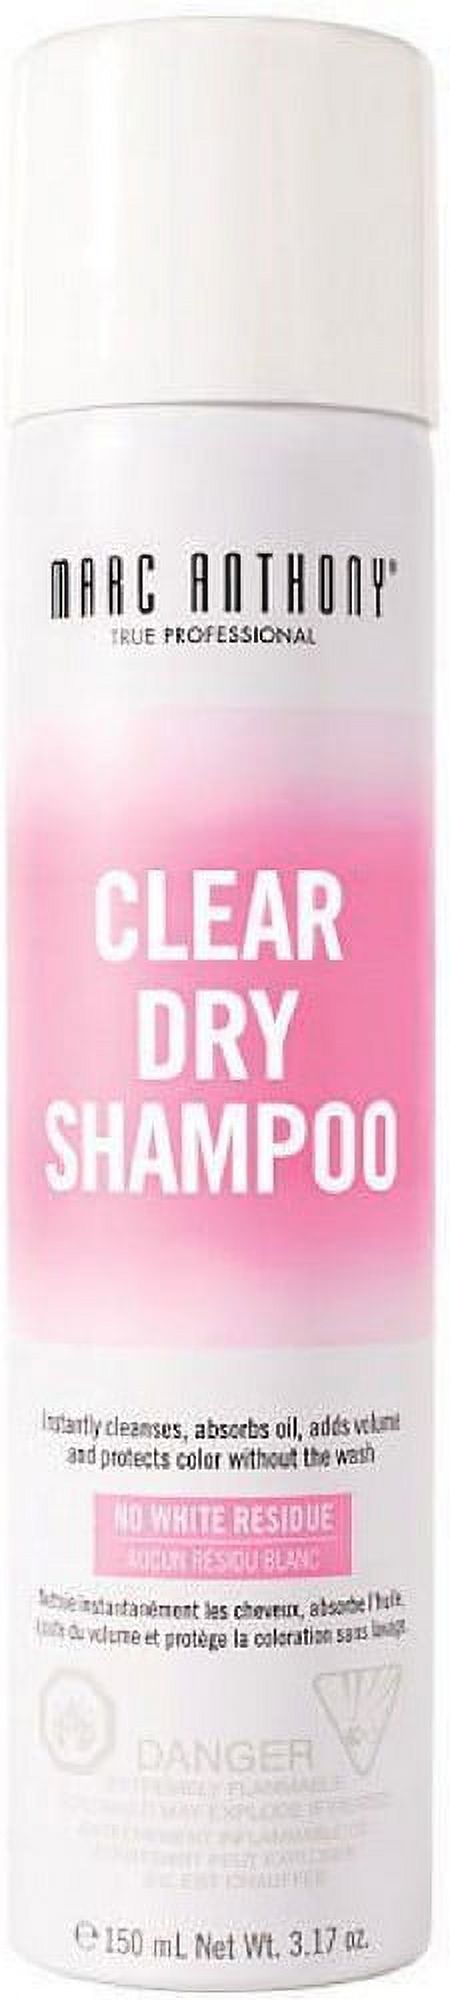 Marc Anthony Cosmetics Marc Anthony Clear Dry Shampoo, 3.17 oz - image 1 of 2